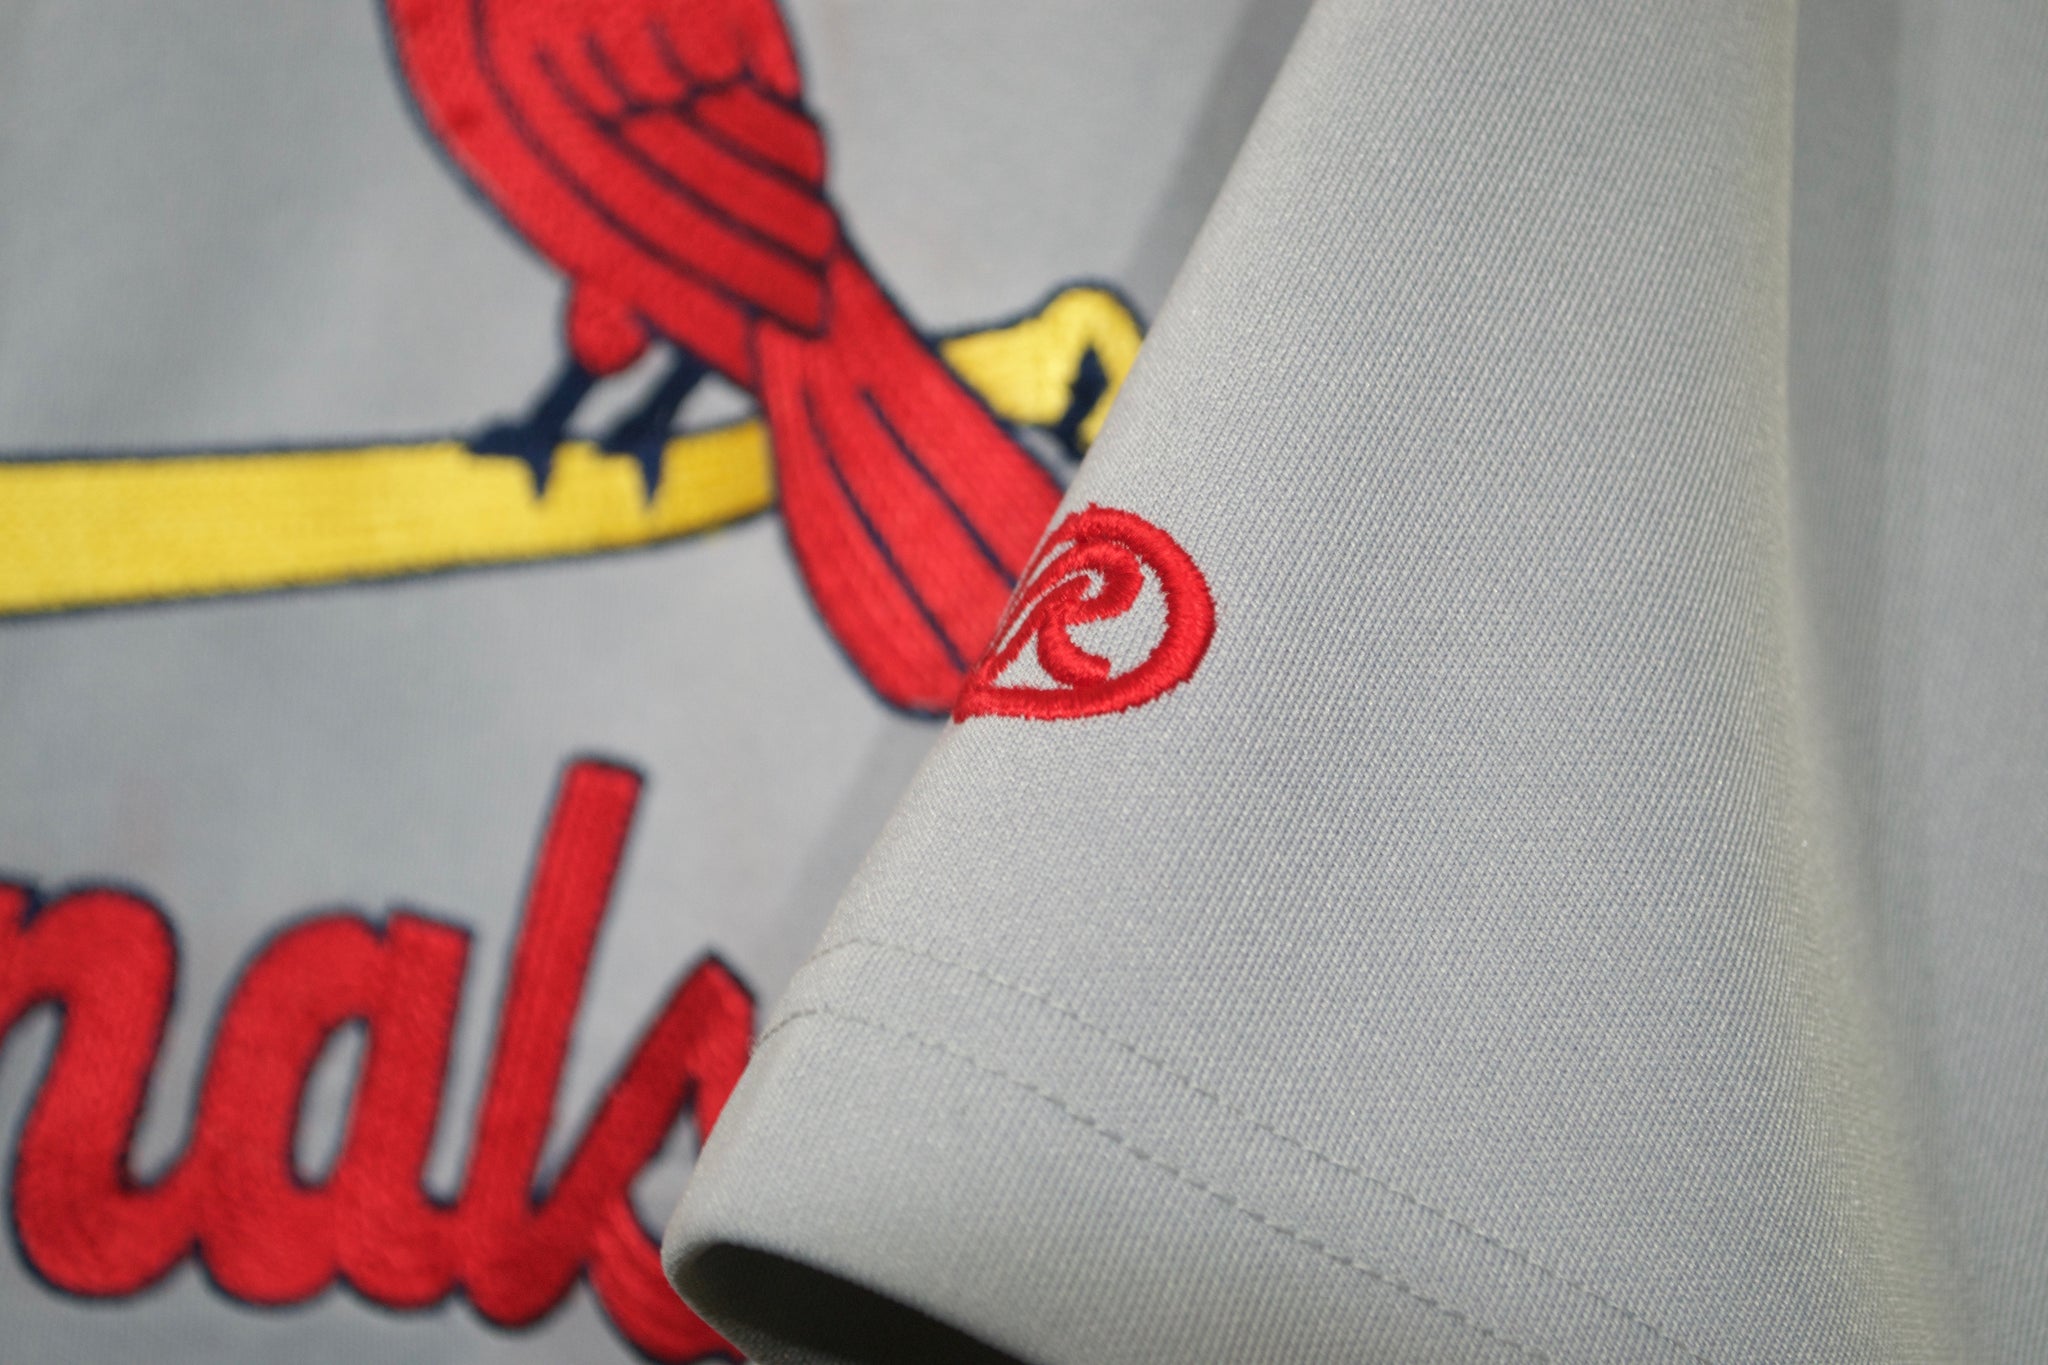 St. Louis Cardinals Authentic Blank Jersey sz 48/XL – First Team Vintage